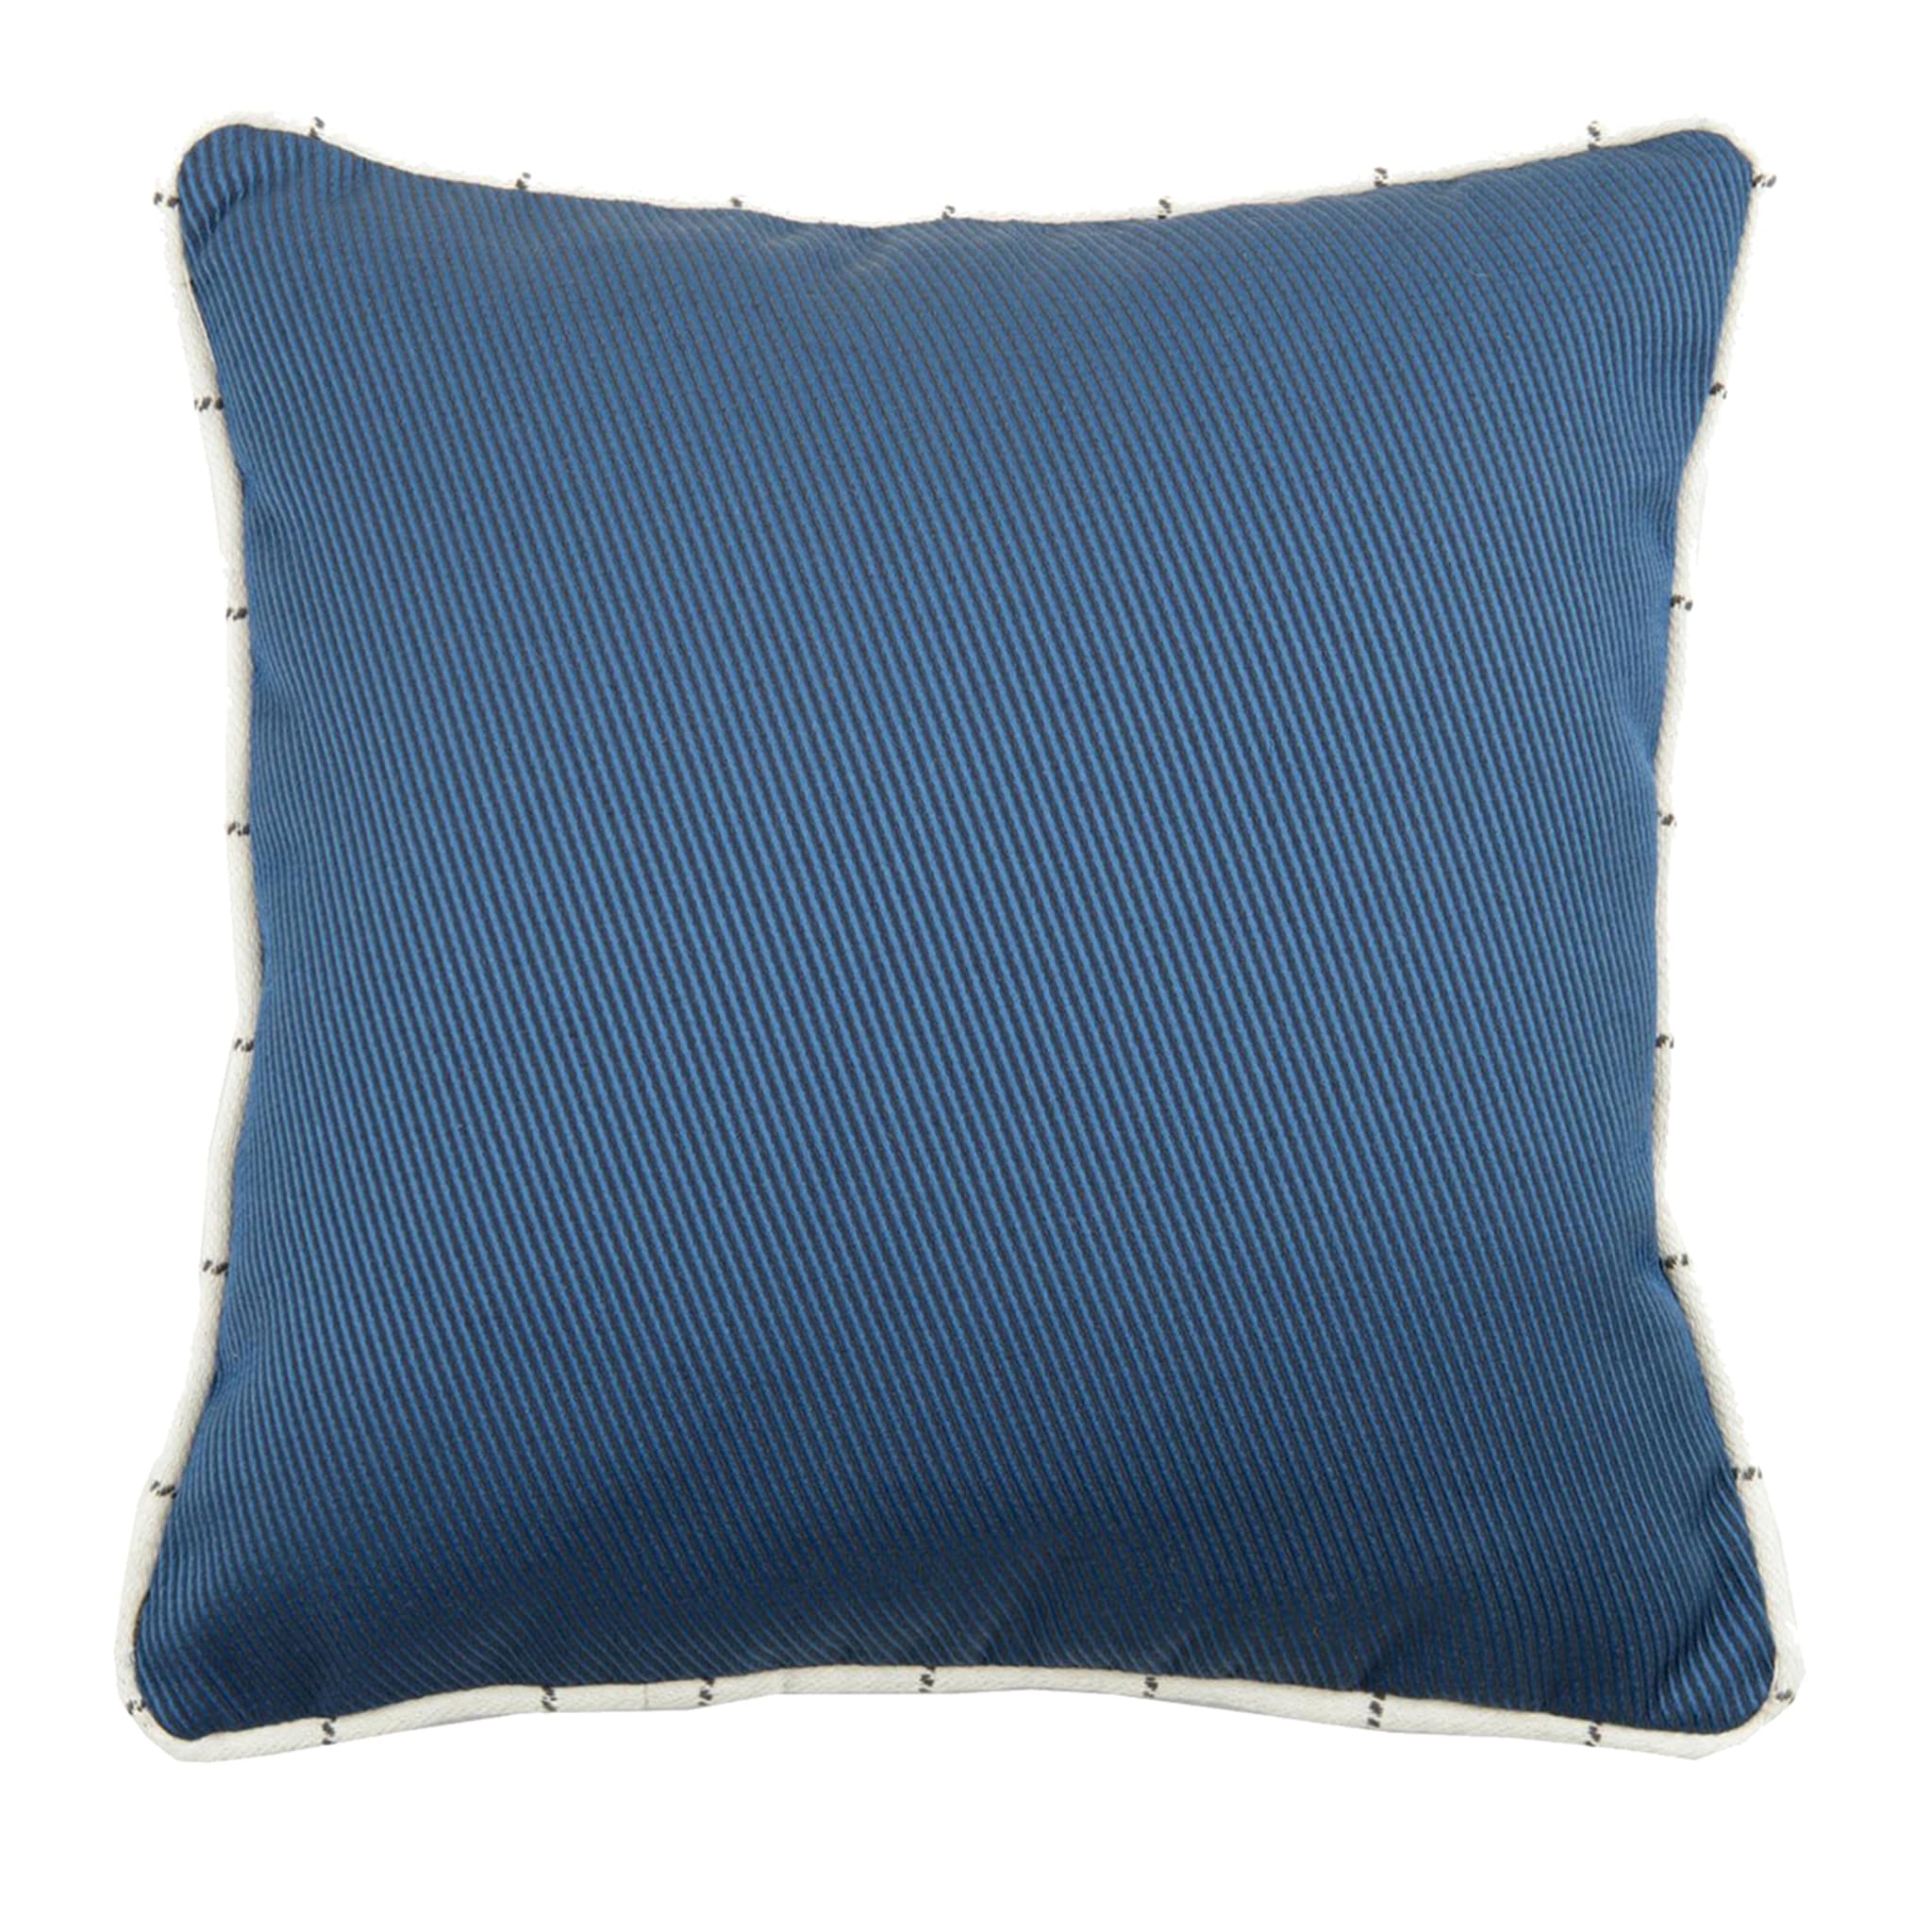 Blue Carré Cushion in false unit jacquard fabric - Main view